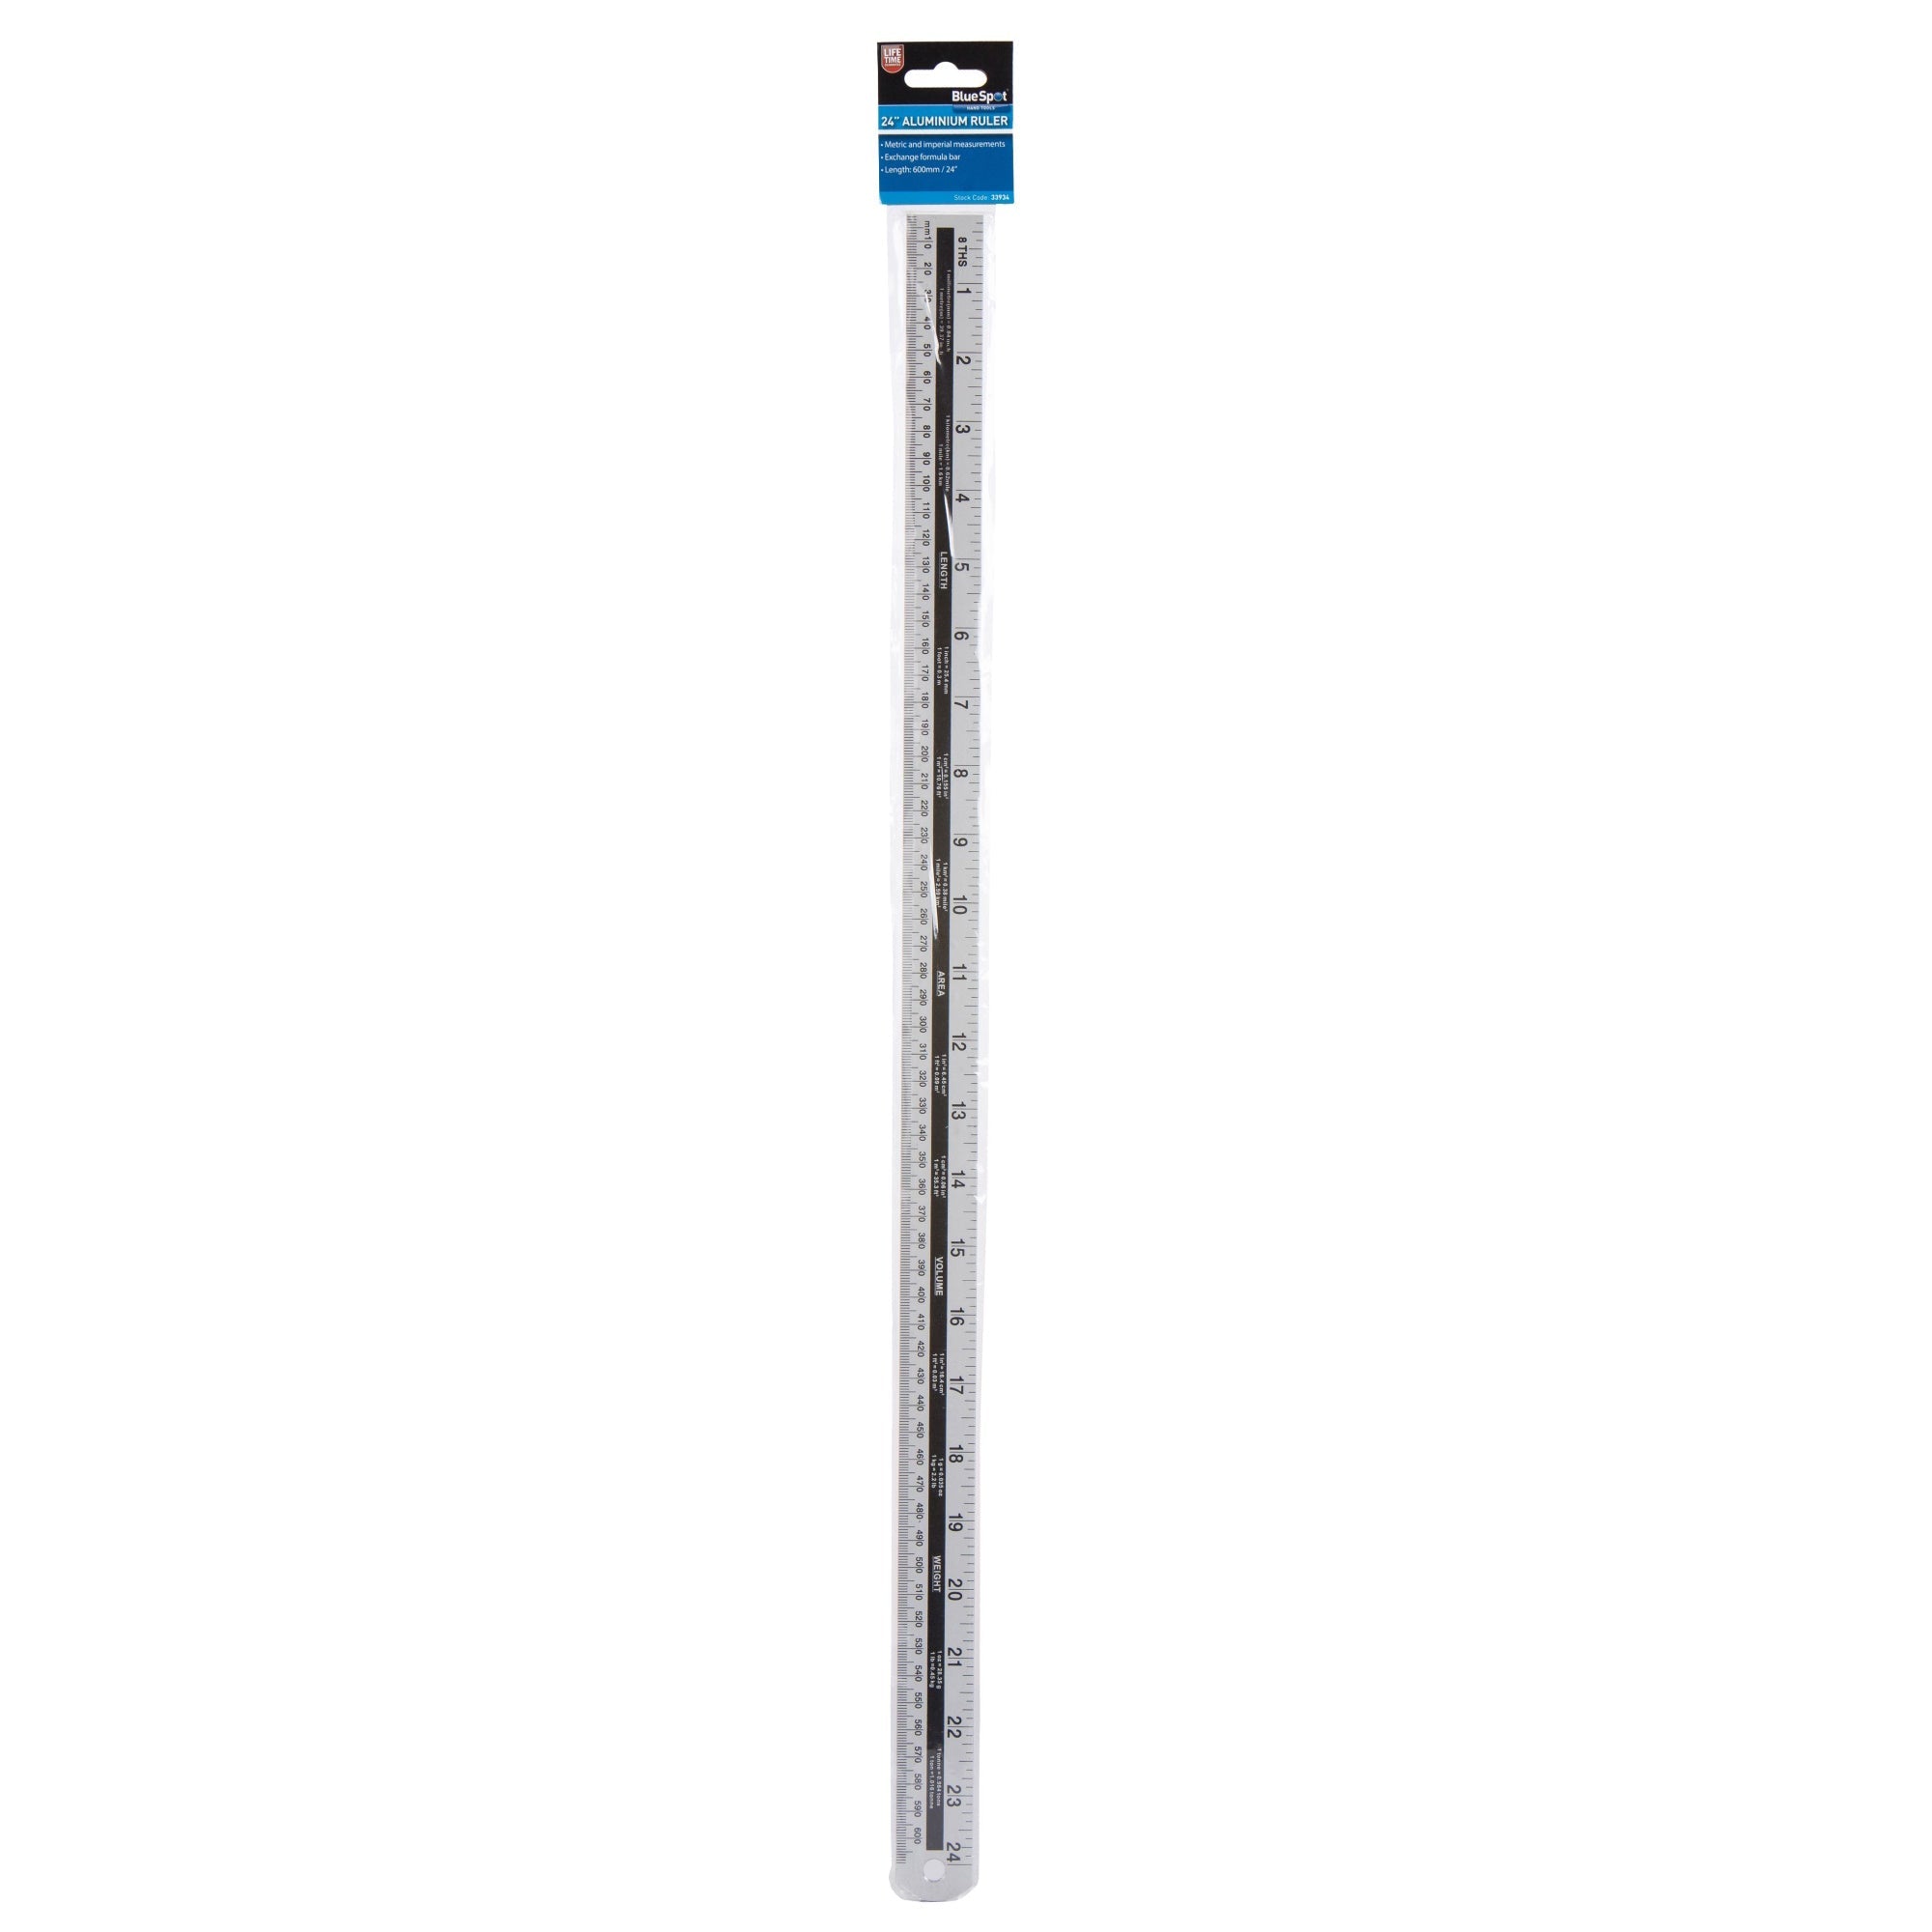 BlueSpot 33934 600mm (24") Aluminium Ruler - Premium Rules from Blue Spot - Just $3.6! Shop now at W Hurst & Son (IW) Ltd